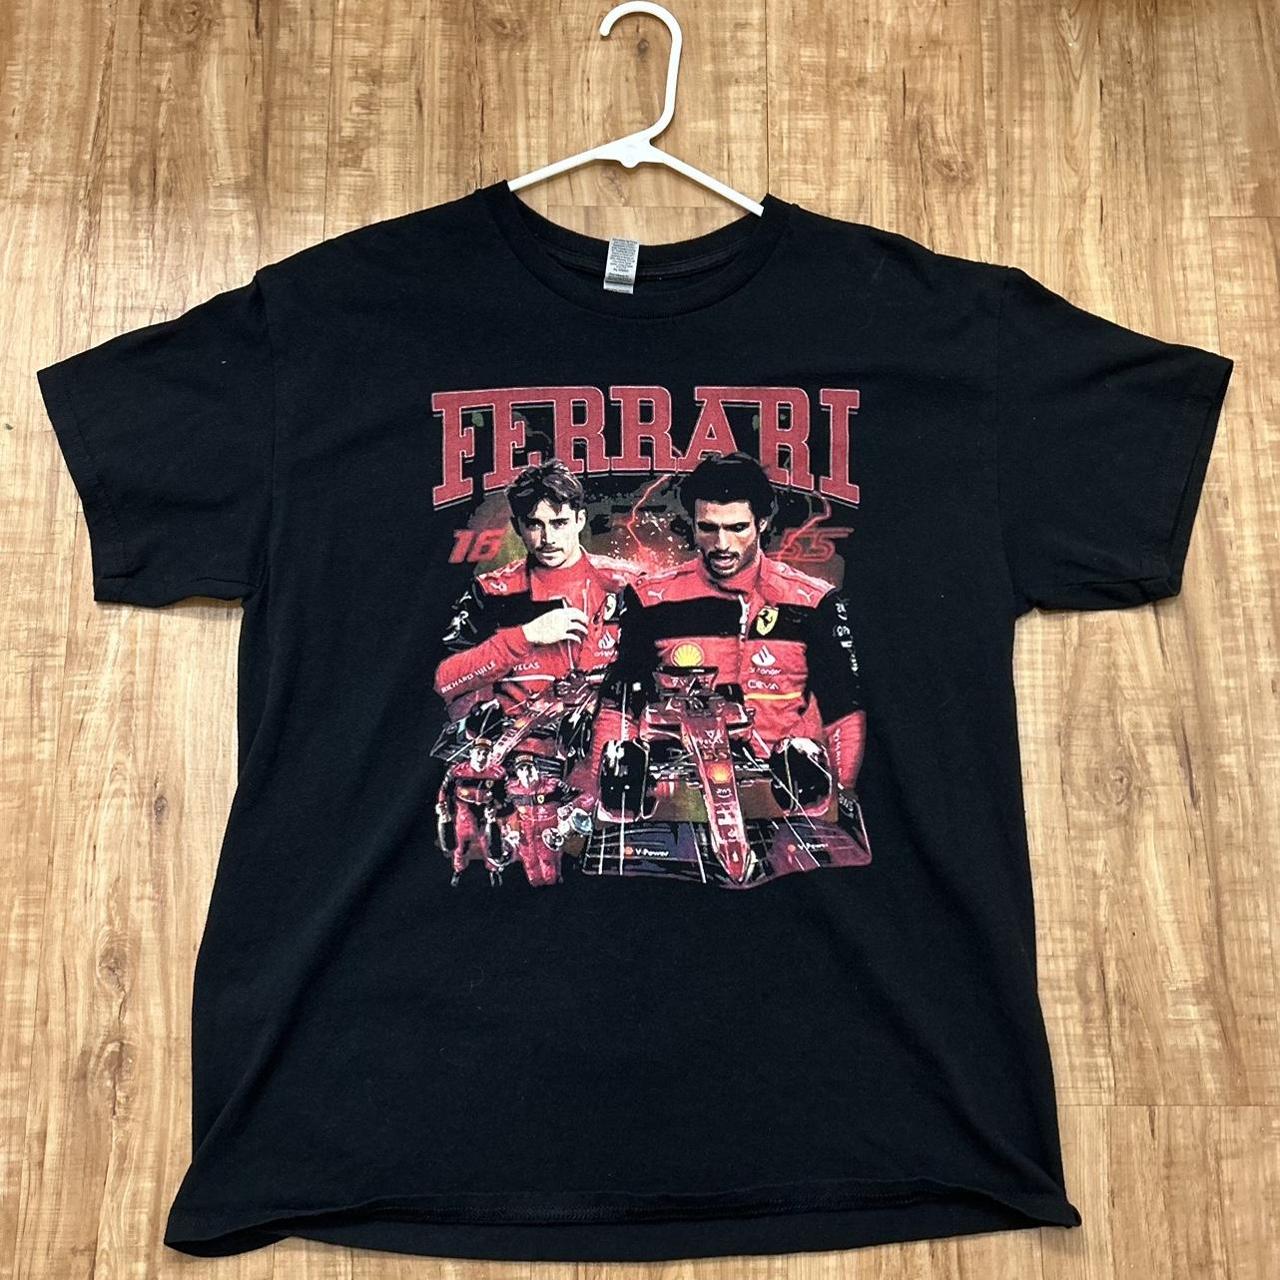 Ferrari Men's Black and Red T-shirt